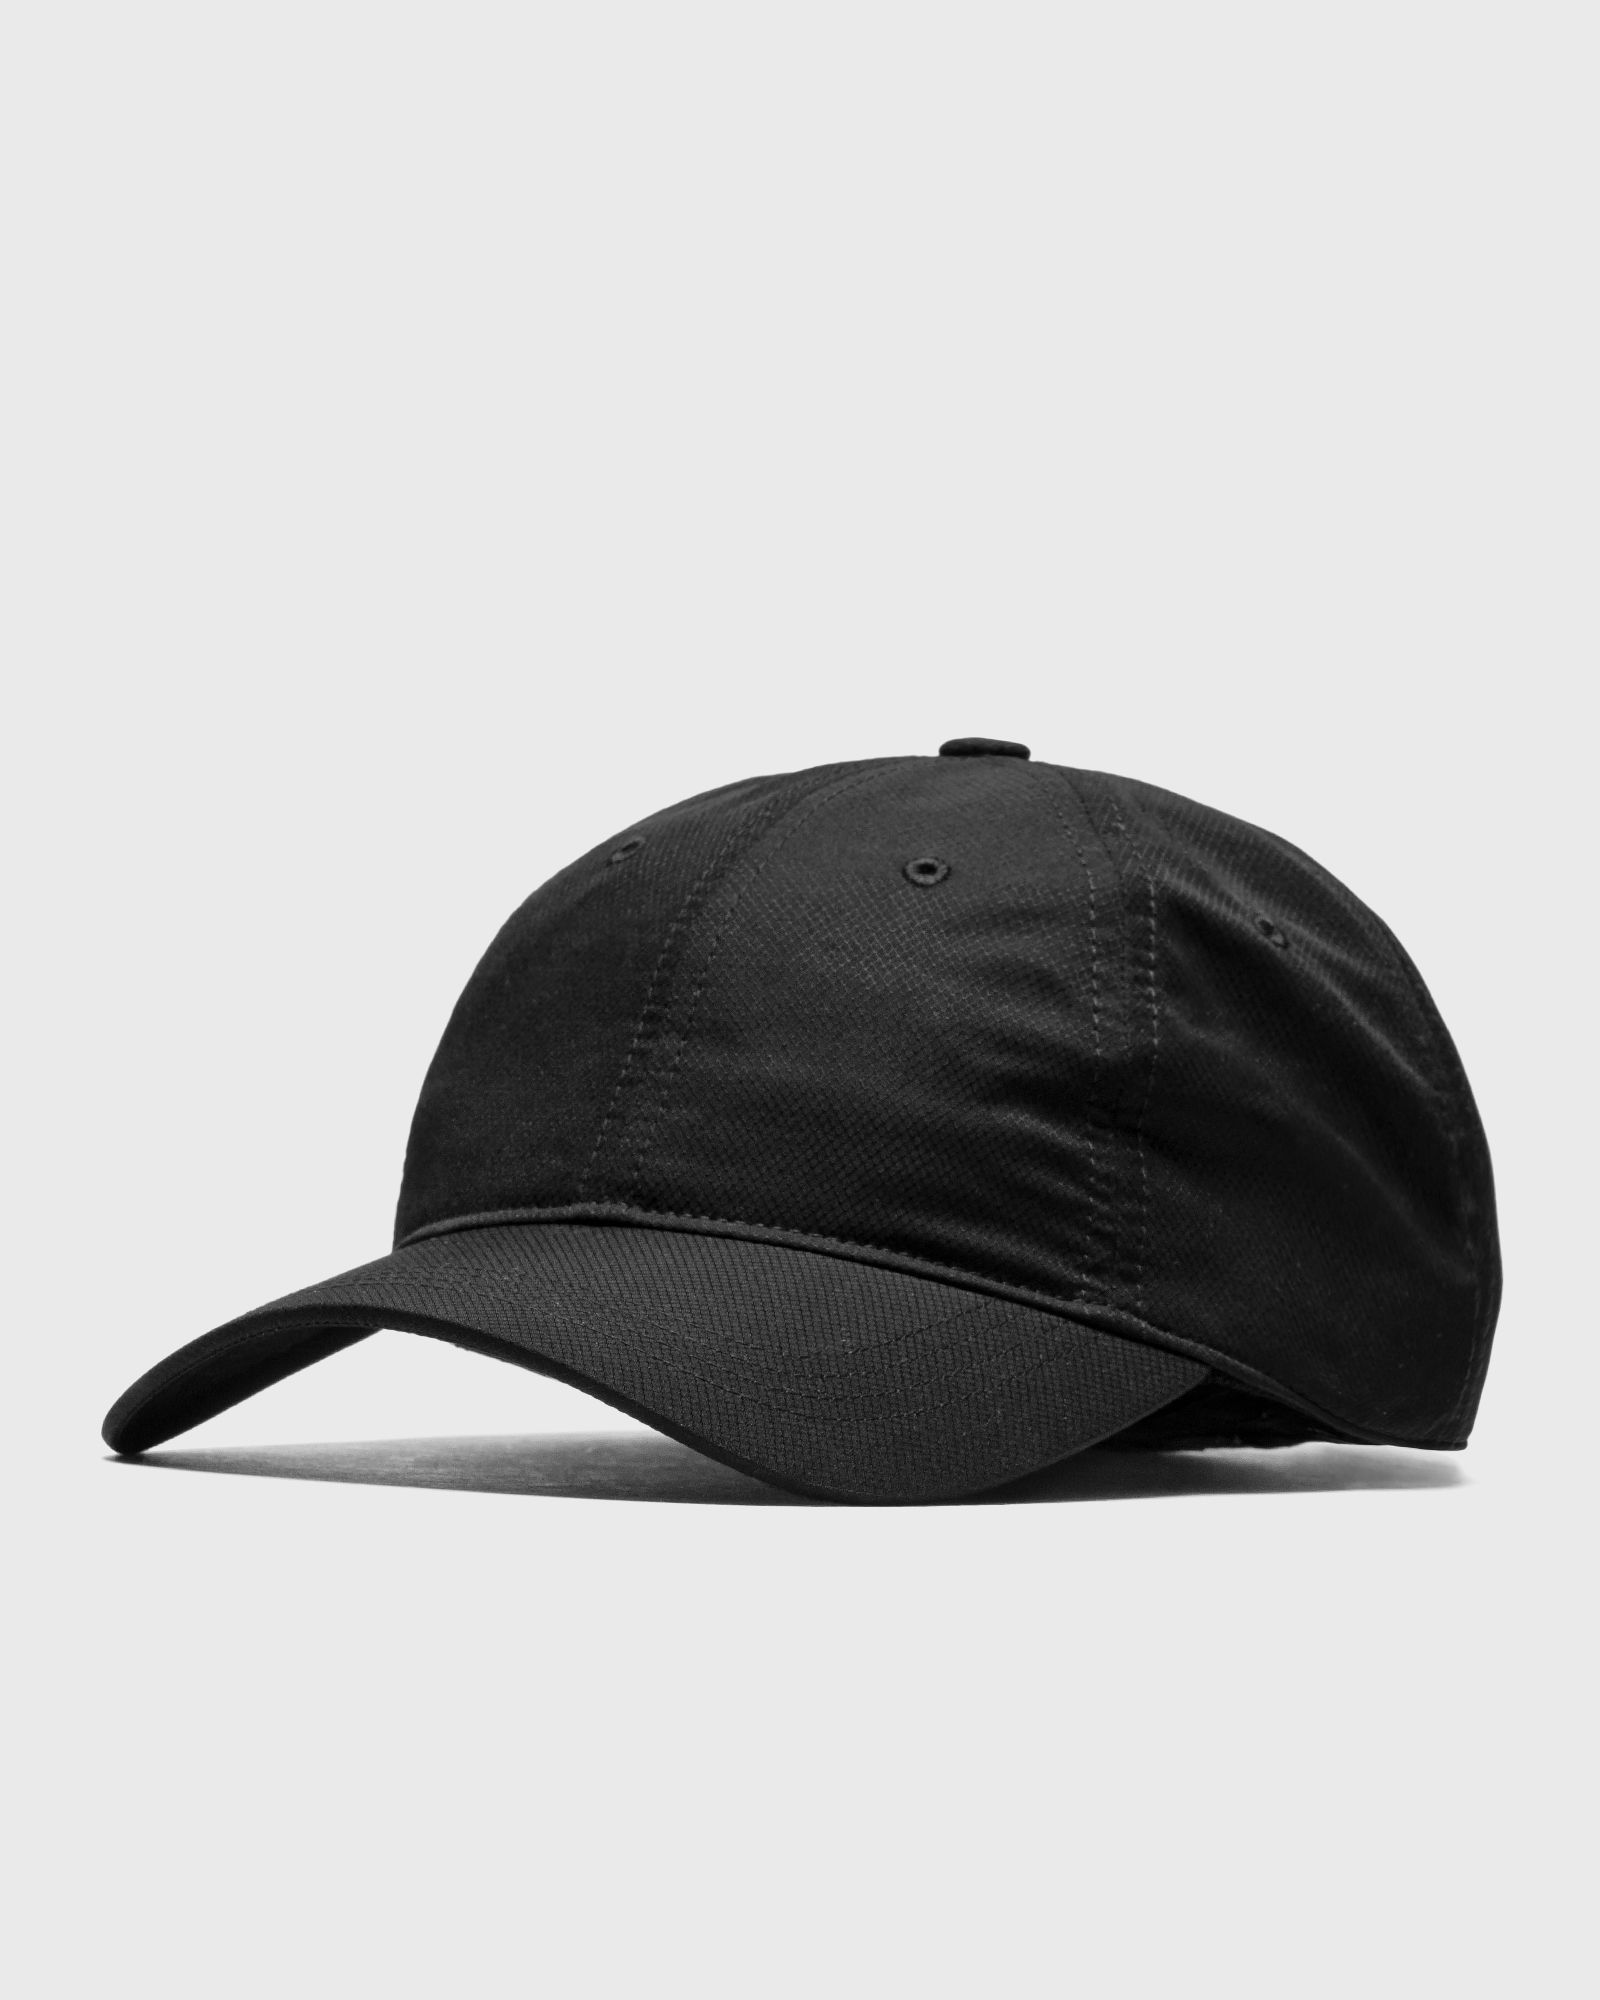 Lacoste - sport lightweight cap men caps black in größe:one size